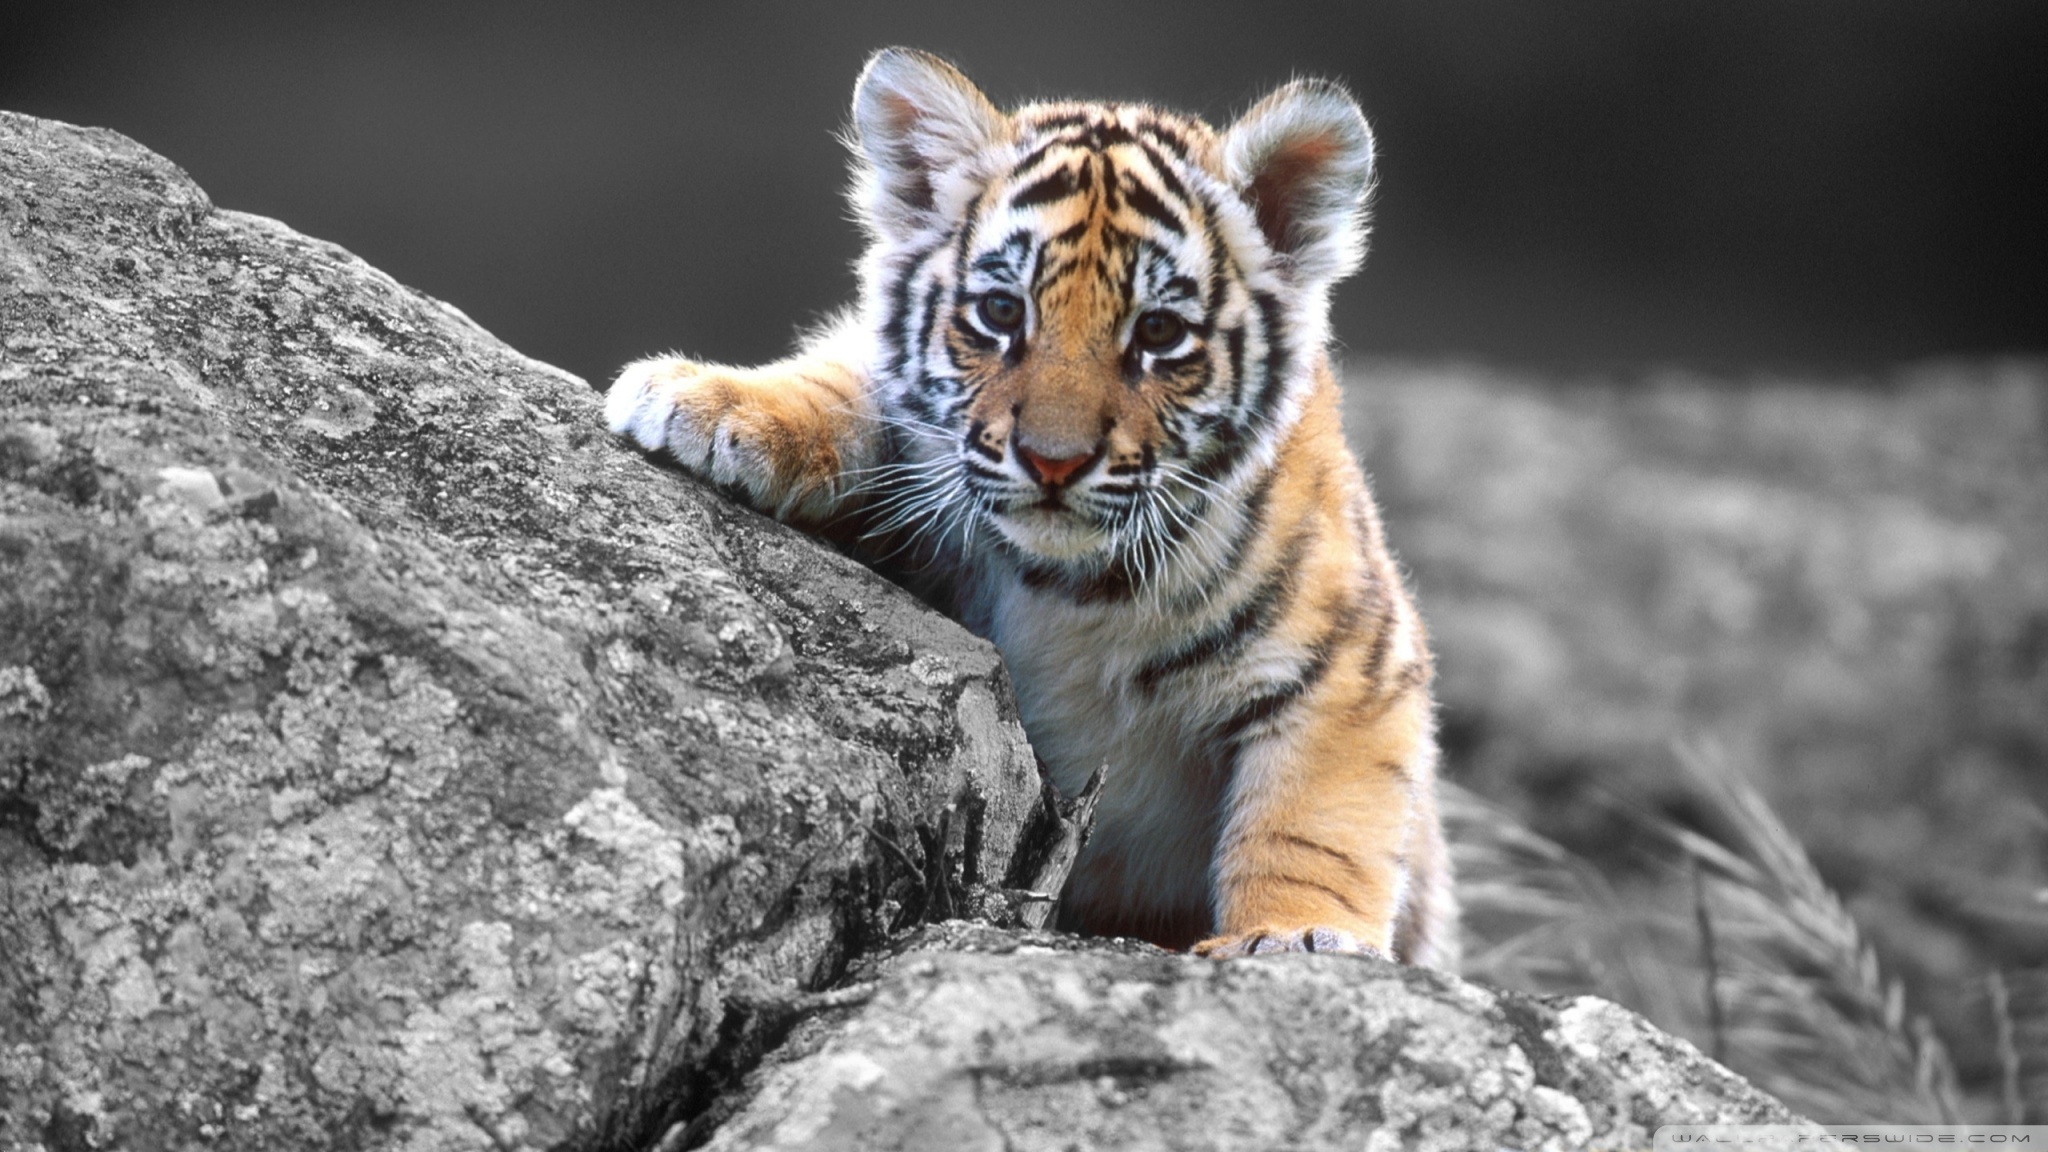 Cute Tiger Cub HD desktop wallpaper : High Definition : Fullscreen ...